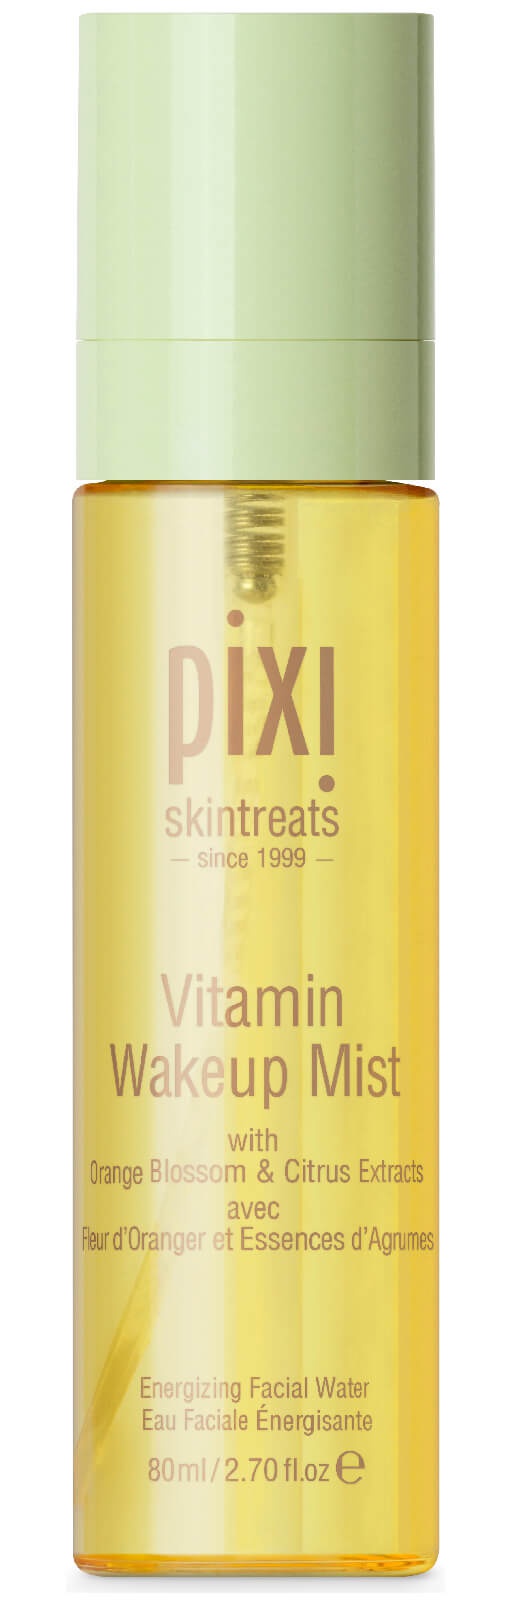 Pixi Vitamin Wakeup Mist